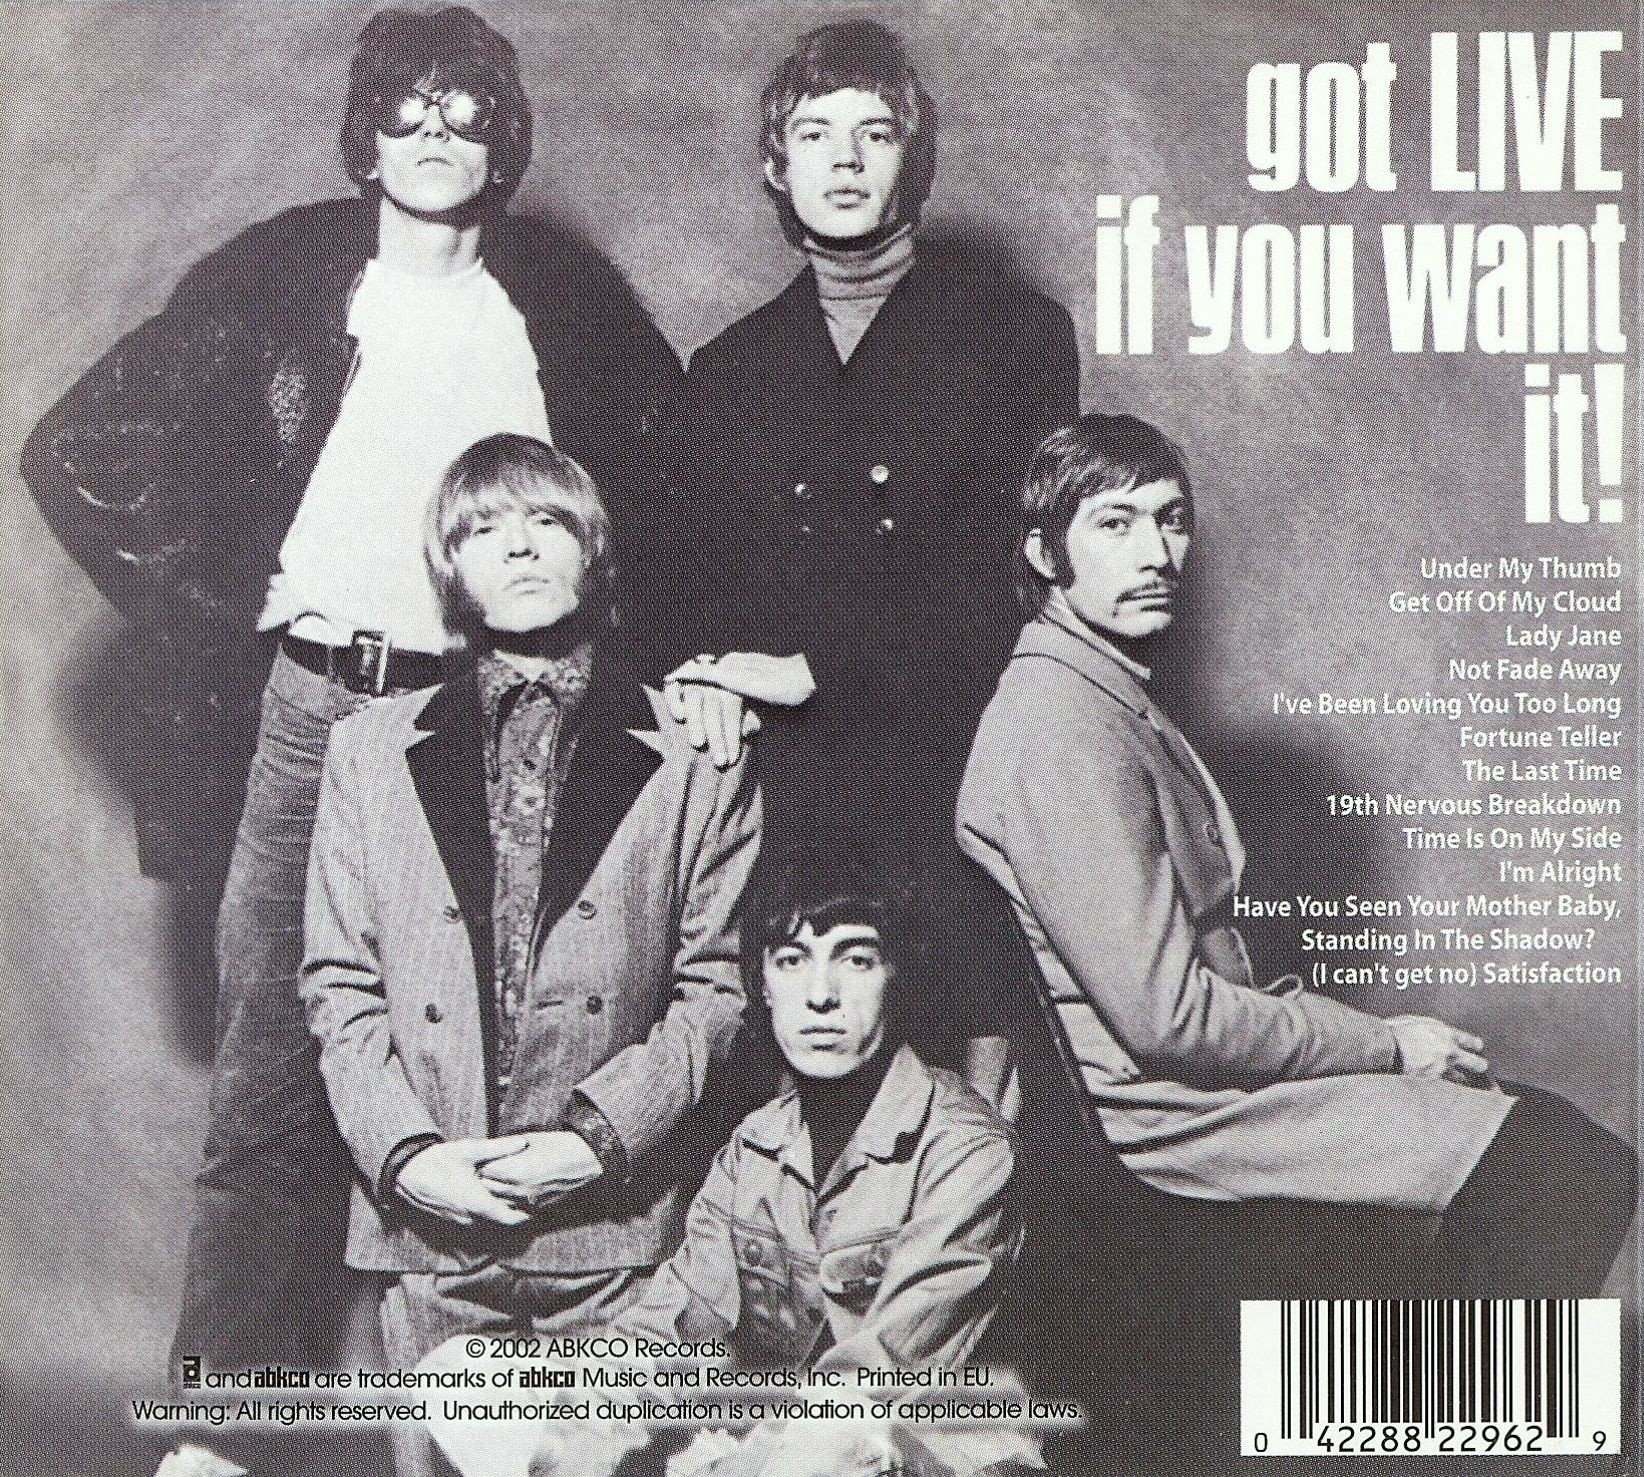 Rolling stones get. Rolling Stones 1966. Роллинг стоунз альбом 1966 Live. The Rolling Stones got Live if you want it 1966. Роллинг стоунз Live.